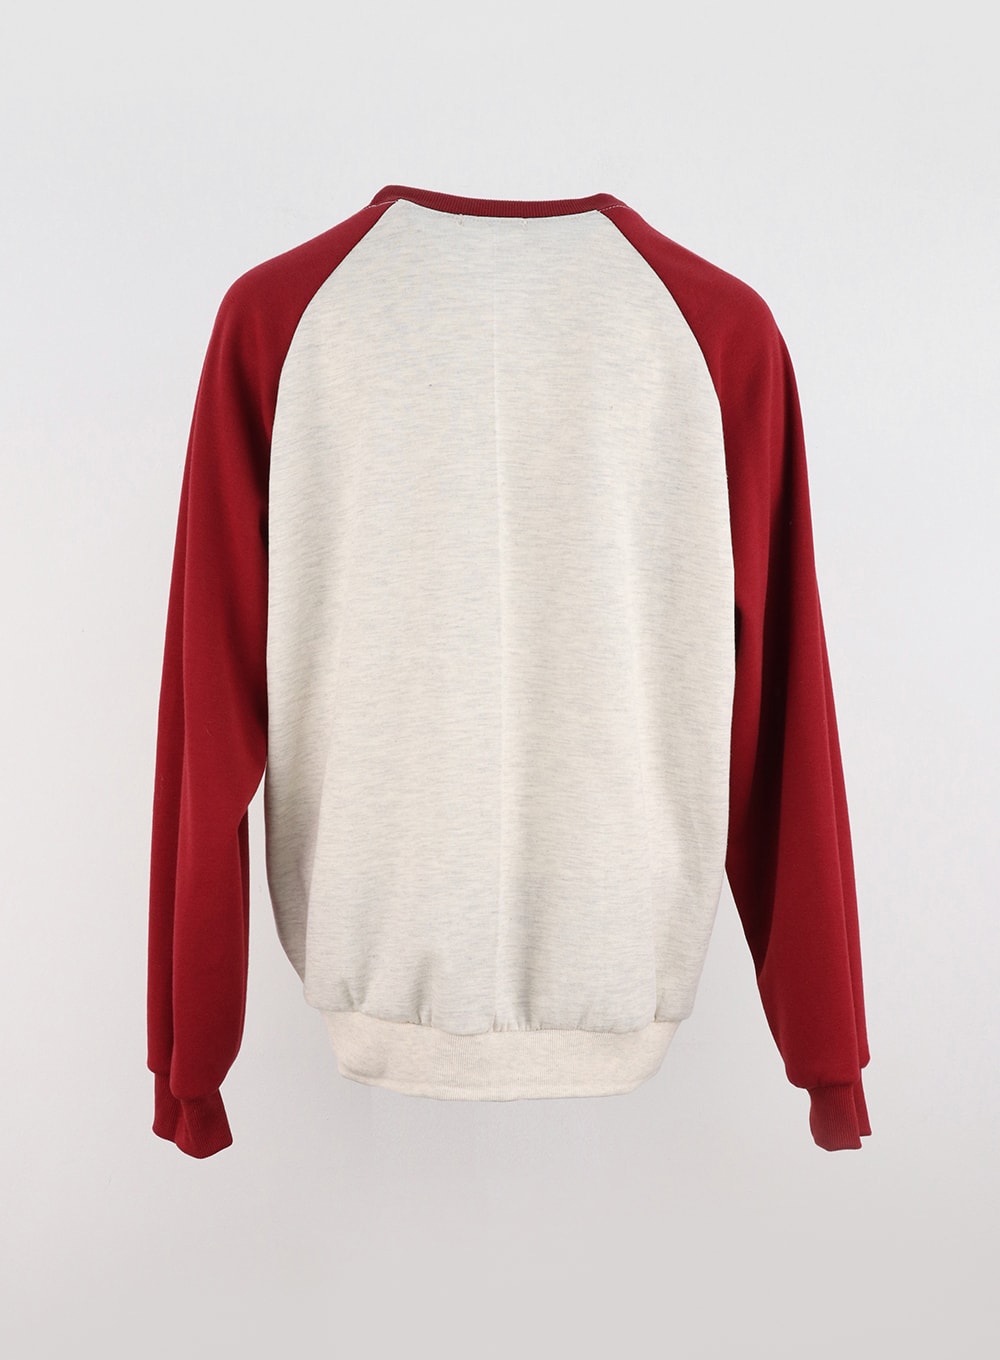 graphic-raglan-pullover-sweatshirt-io324